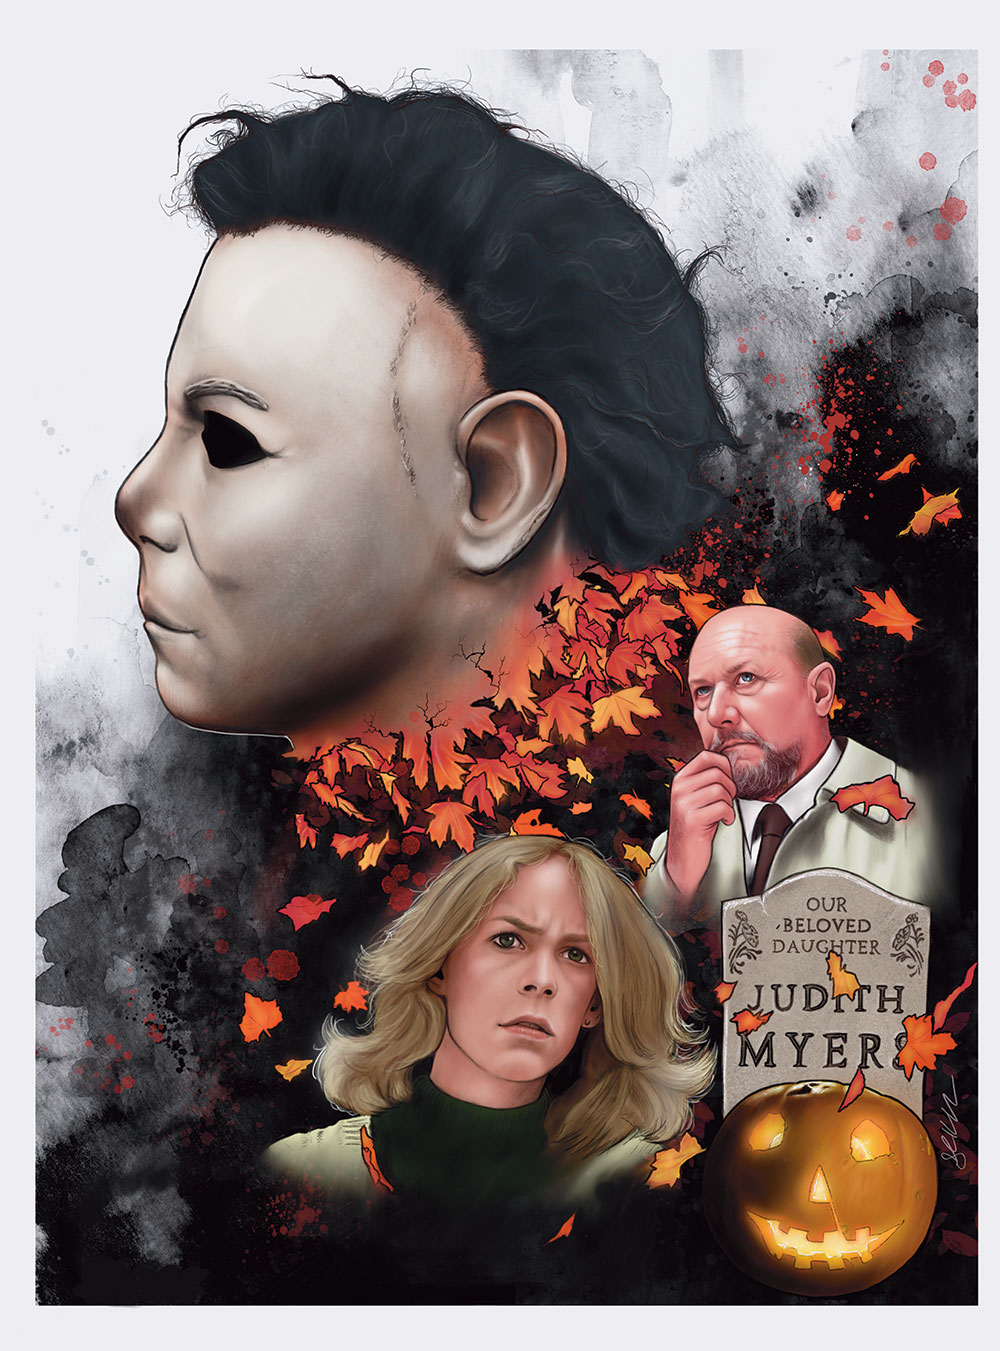 [News] John Carpenter's Halloween: Artbook Brings Fans New Visions of Classic Horror